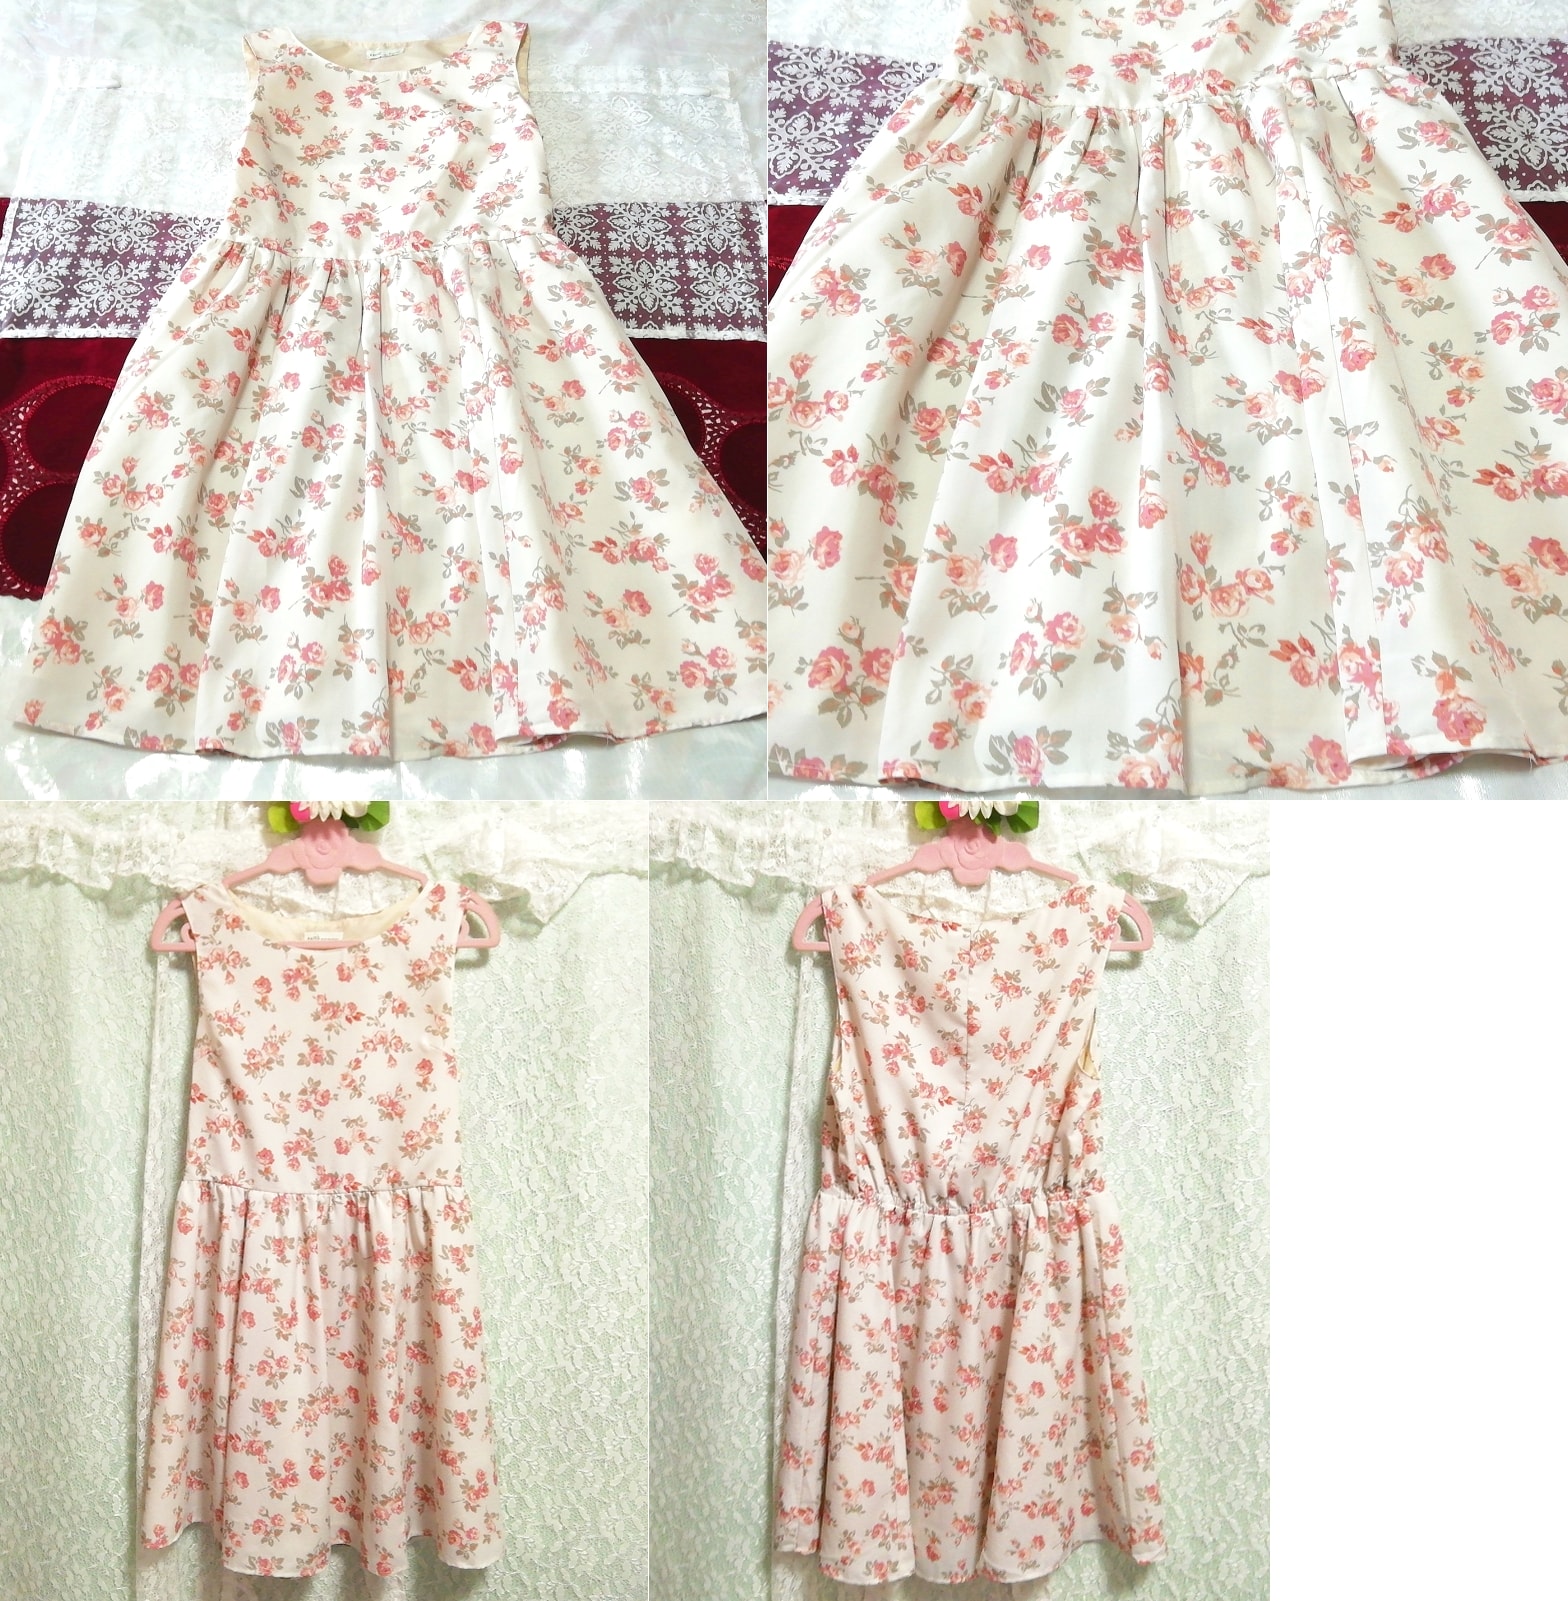 White pink floral pattern sleeveless negligee nightgown nightwear mini dress, mini skirt, m size